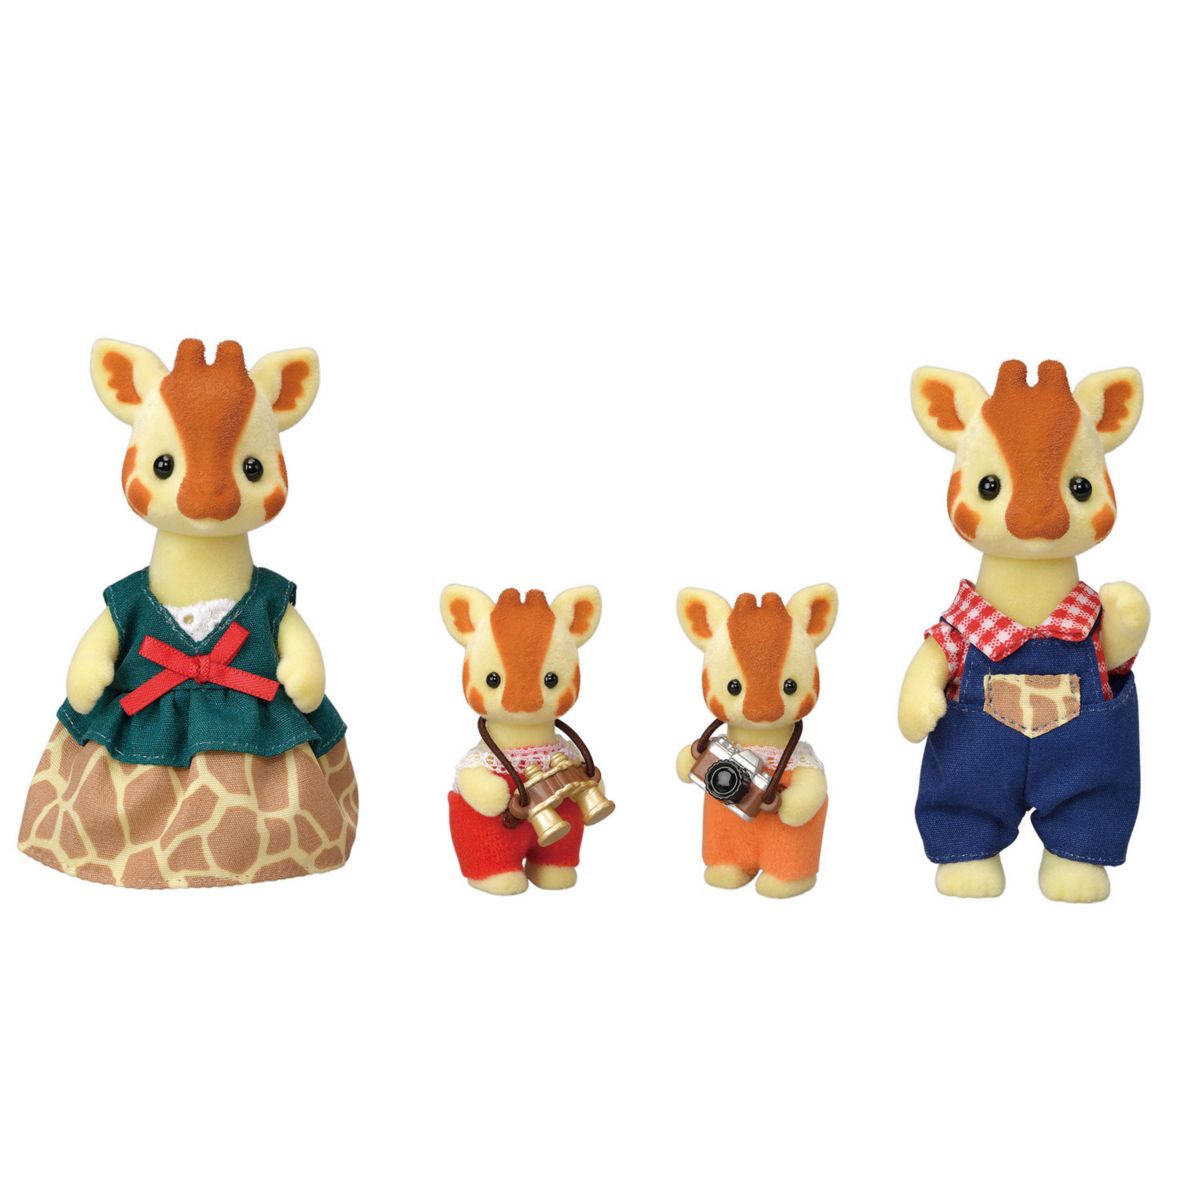 Семейный набор Calico Critters Highbranch Giraffe из 4 коллекционных фигурок кукол Calico Critters